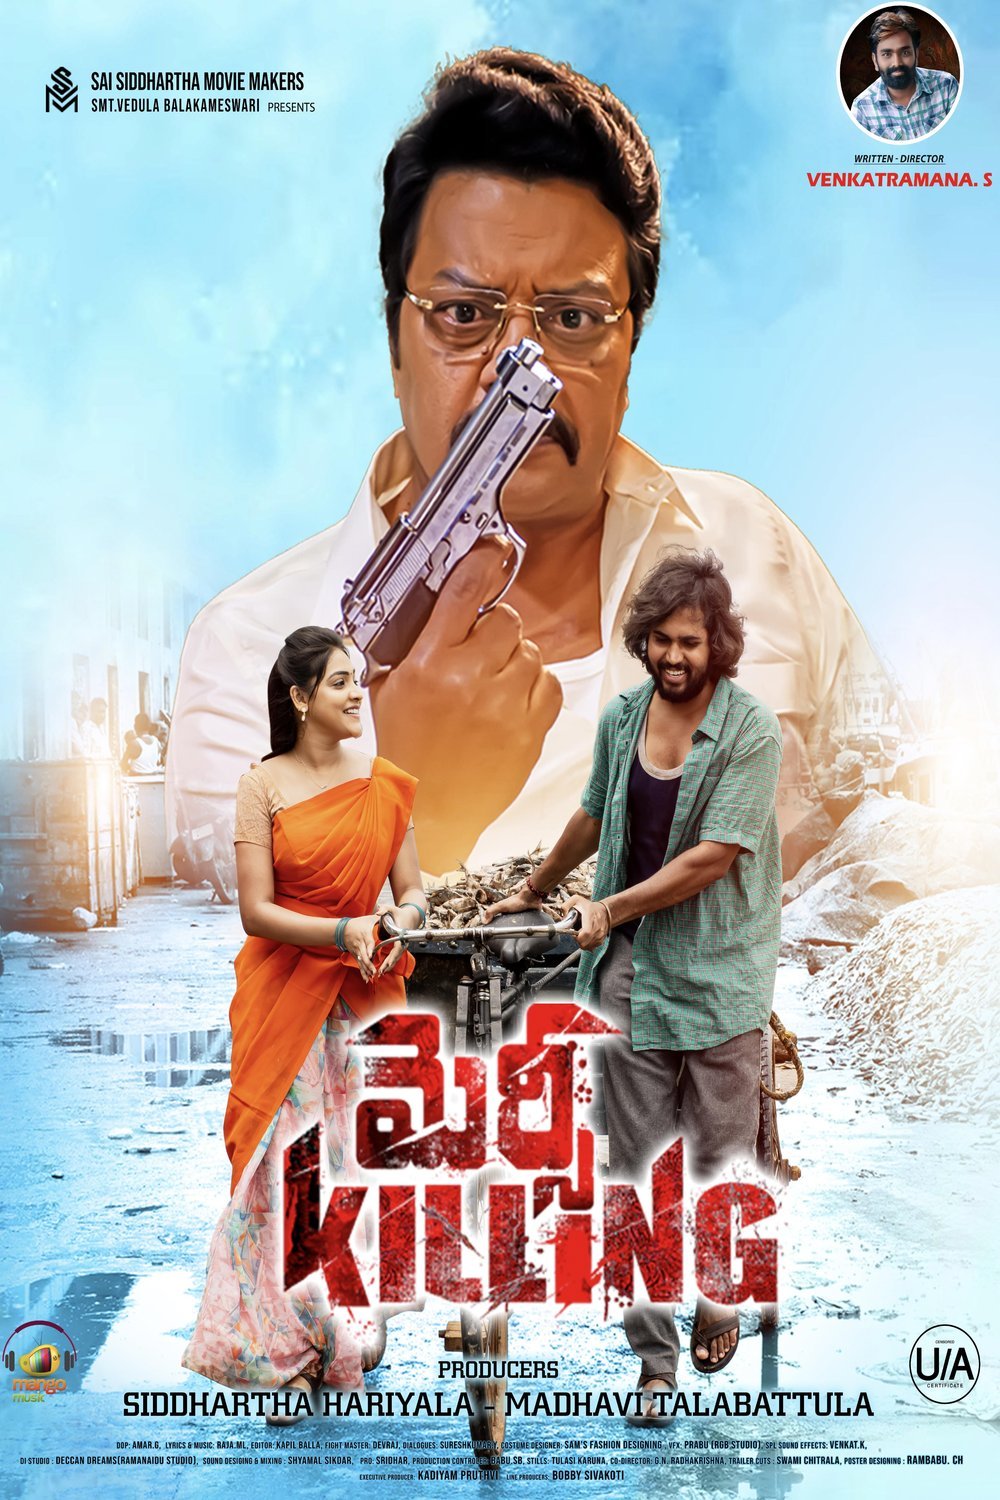 Telugu poster of the movie Mercy Killing